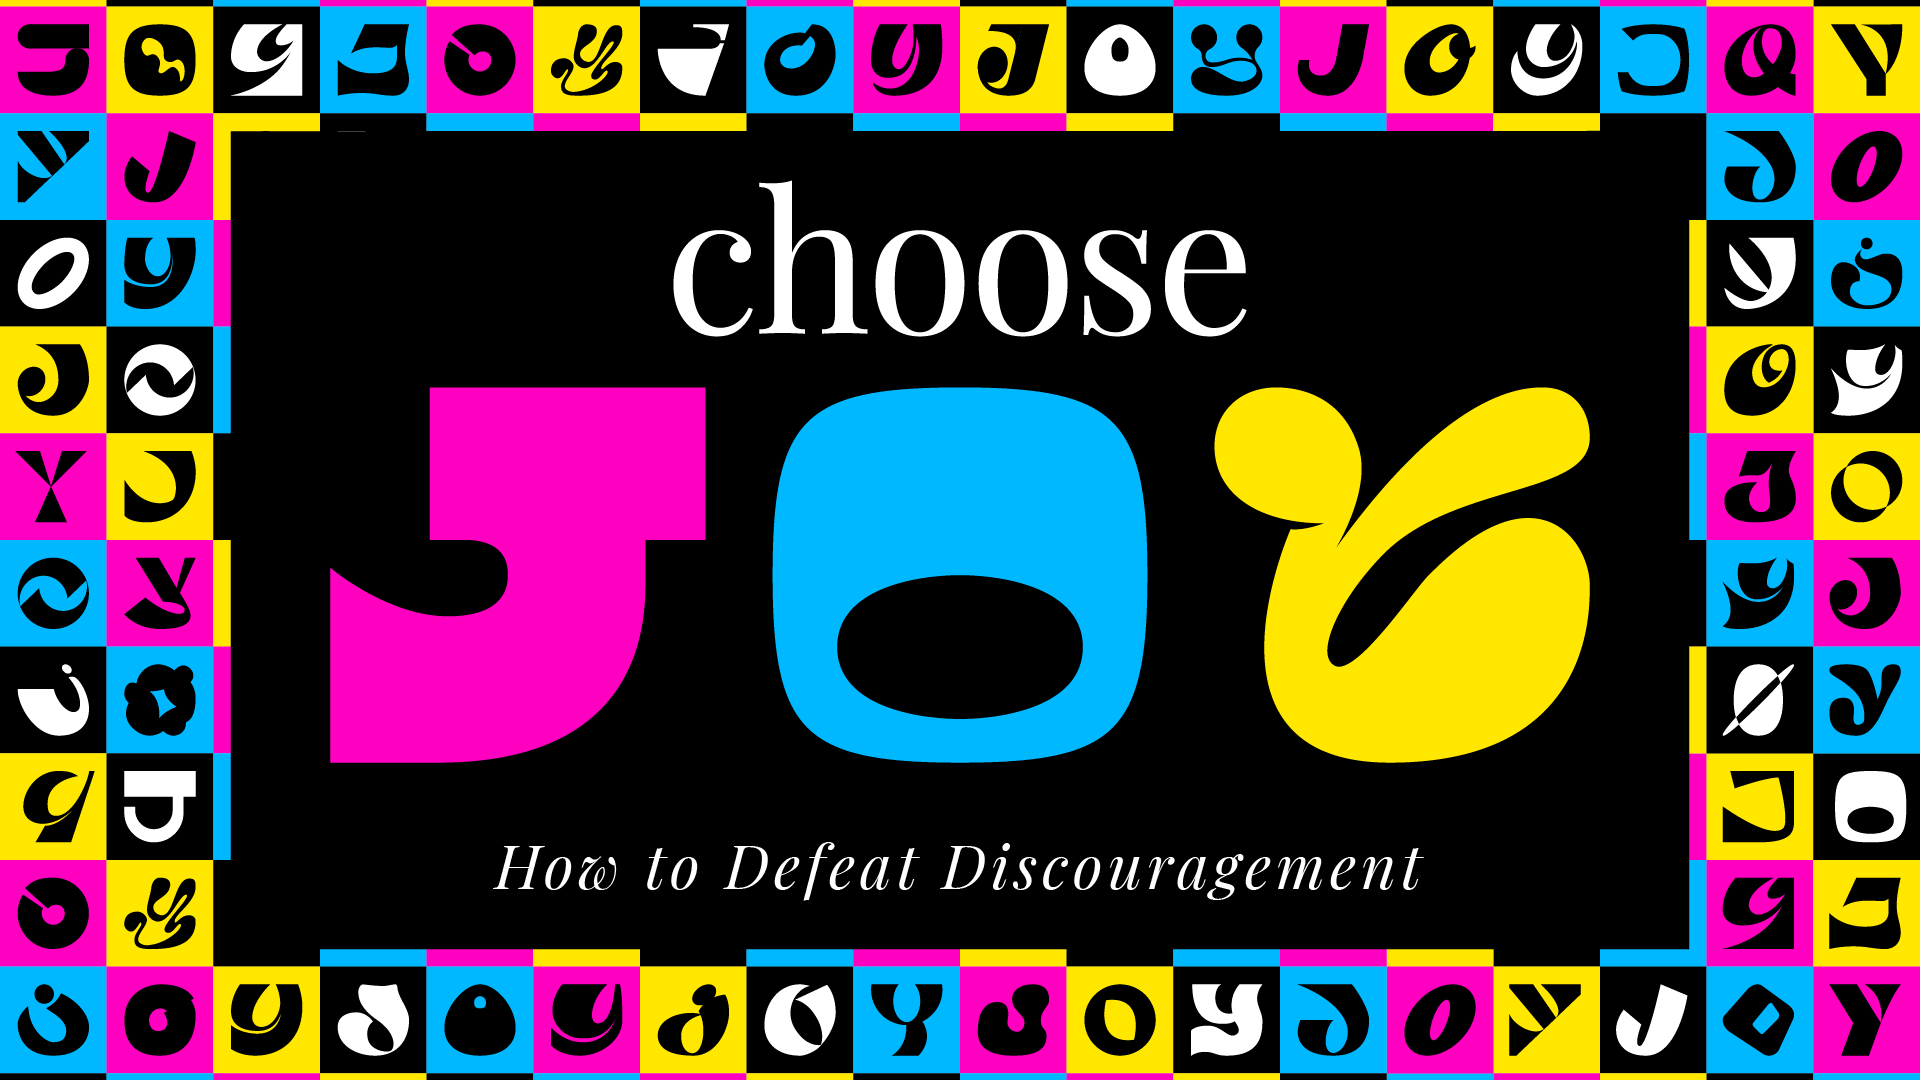 Choose Joy: How to defeat discouragement